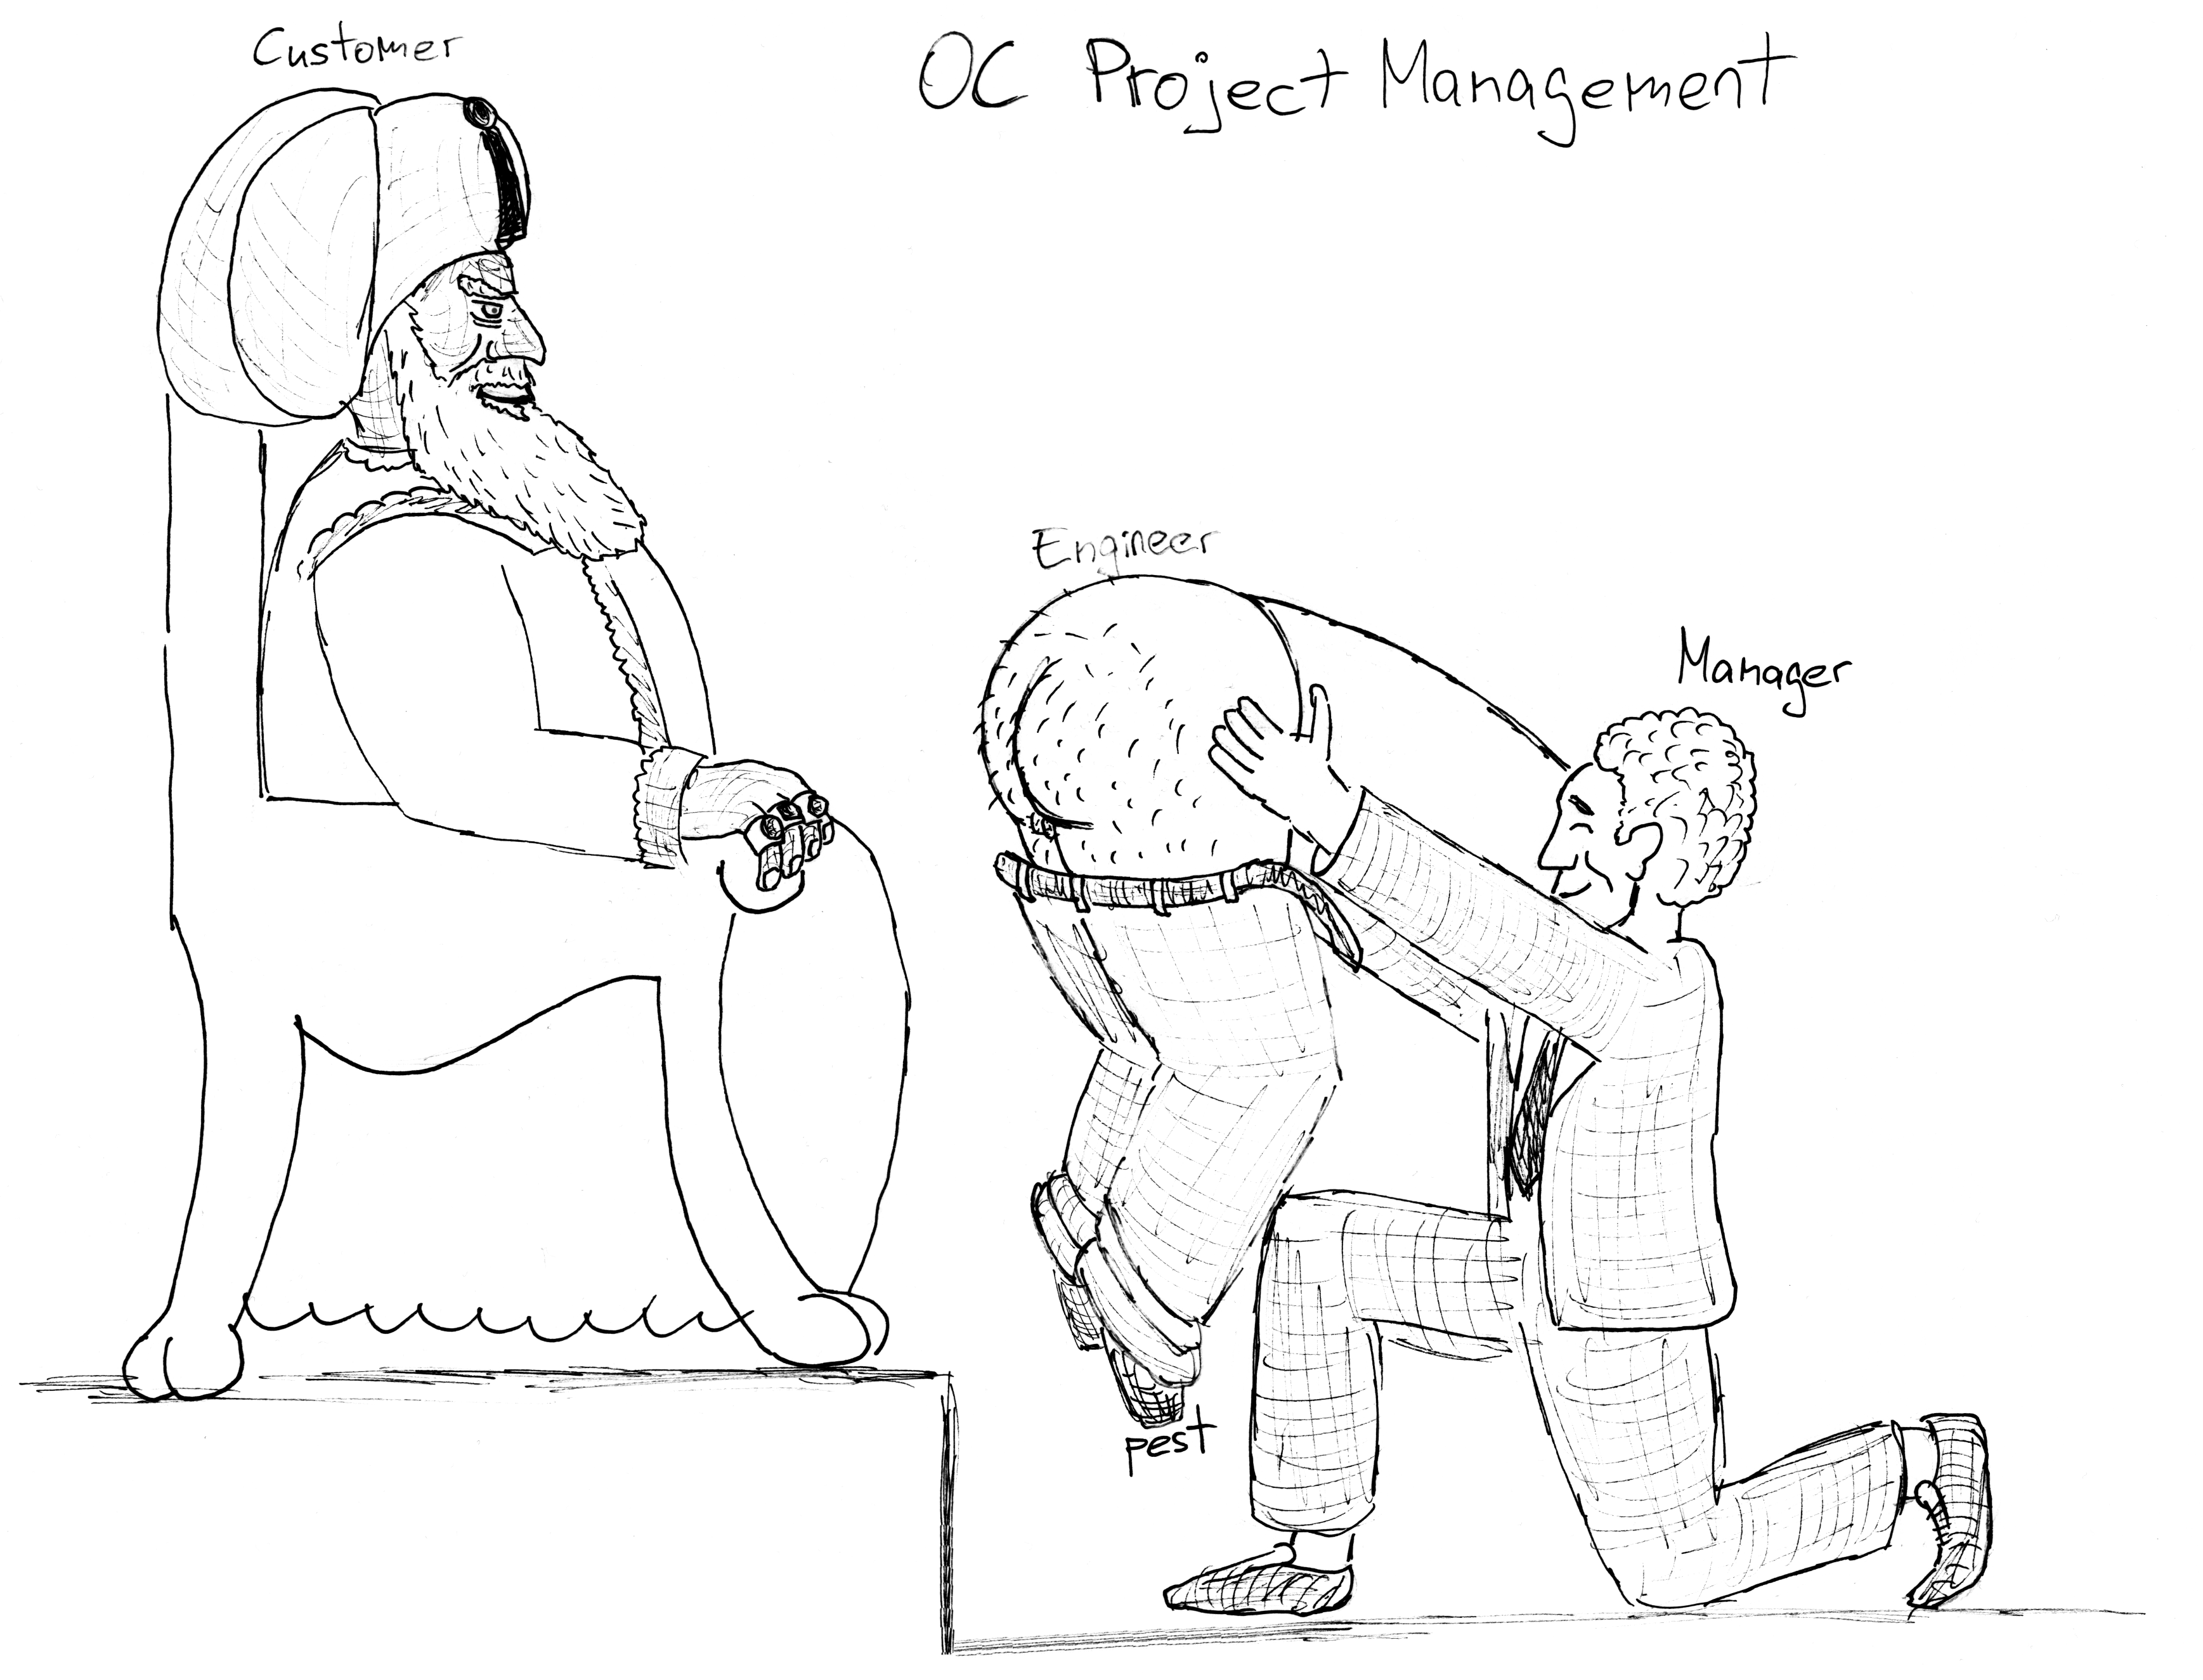 OC Project Management